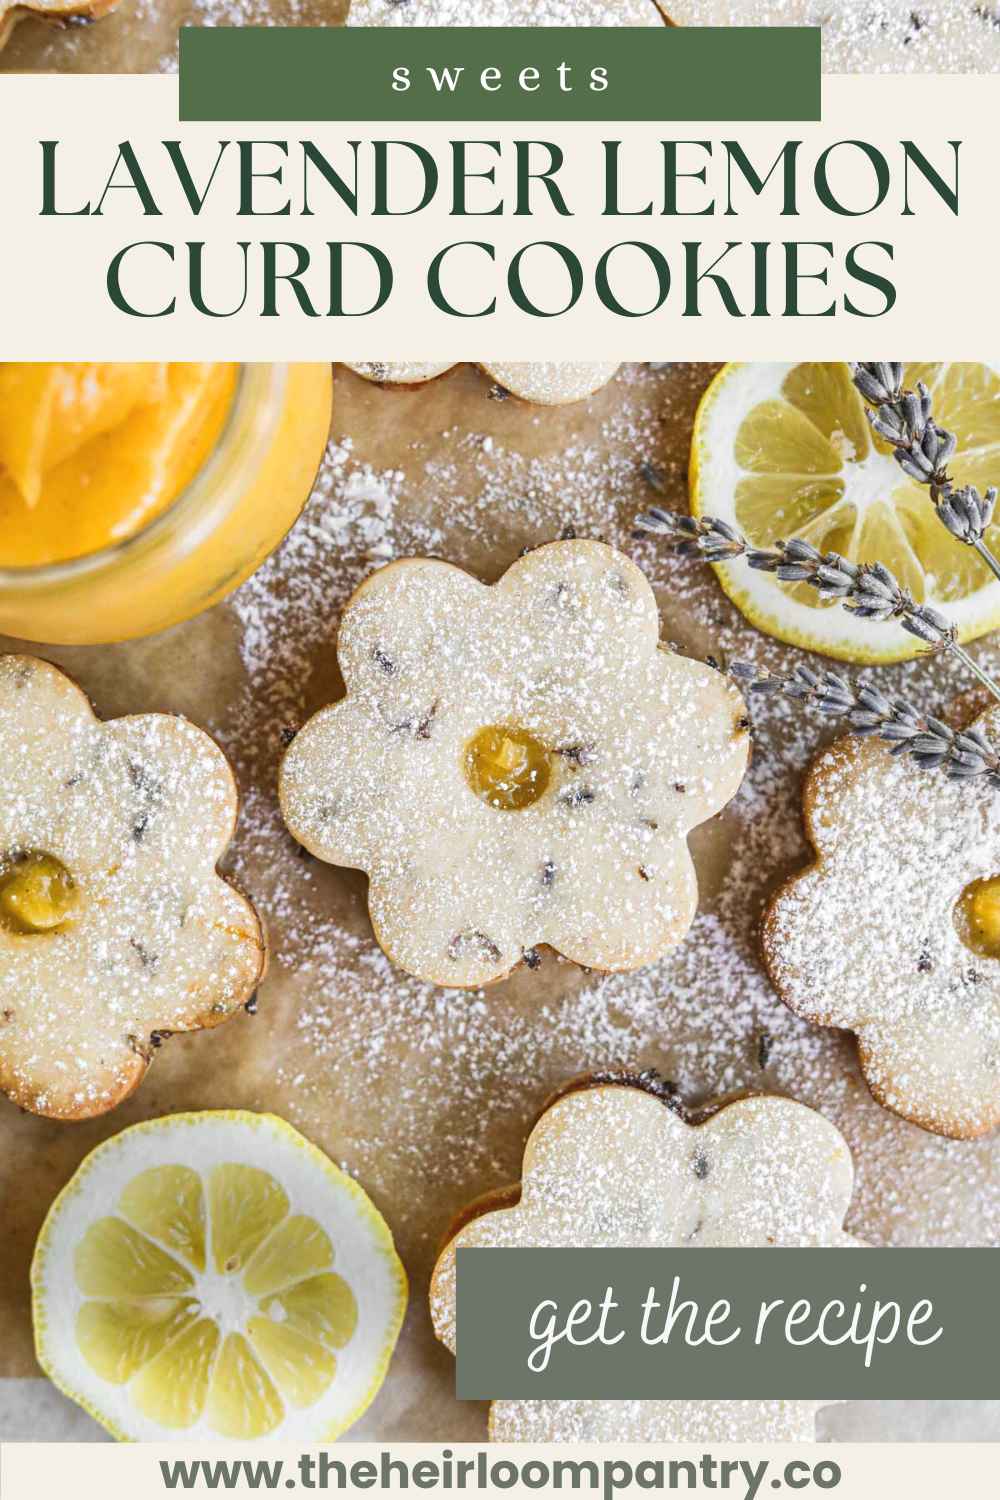 Lavender lemon curd cookies Pinterest pin.